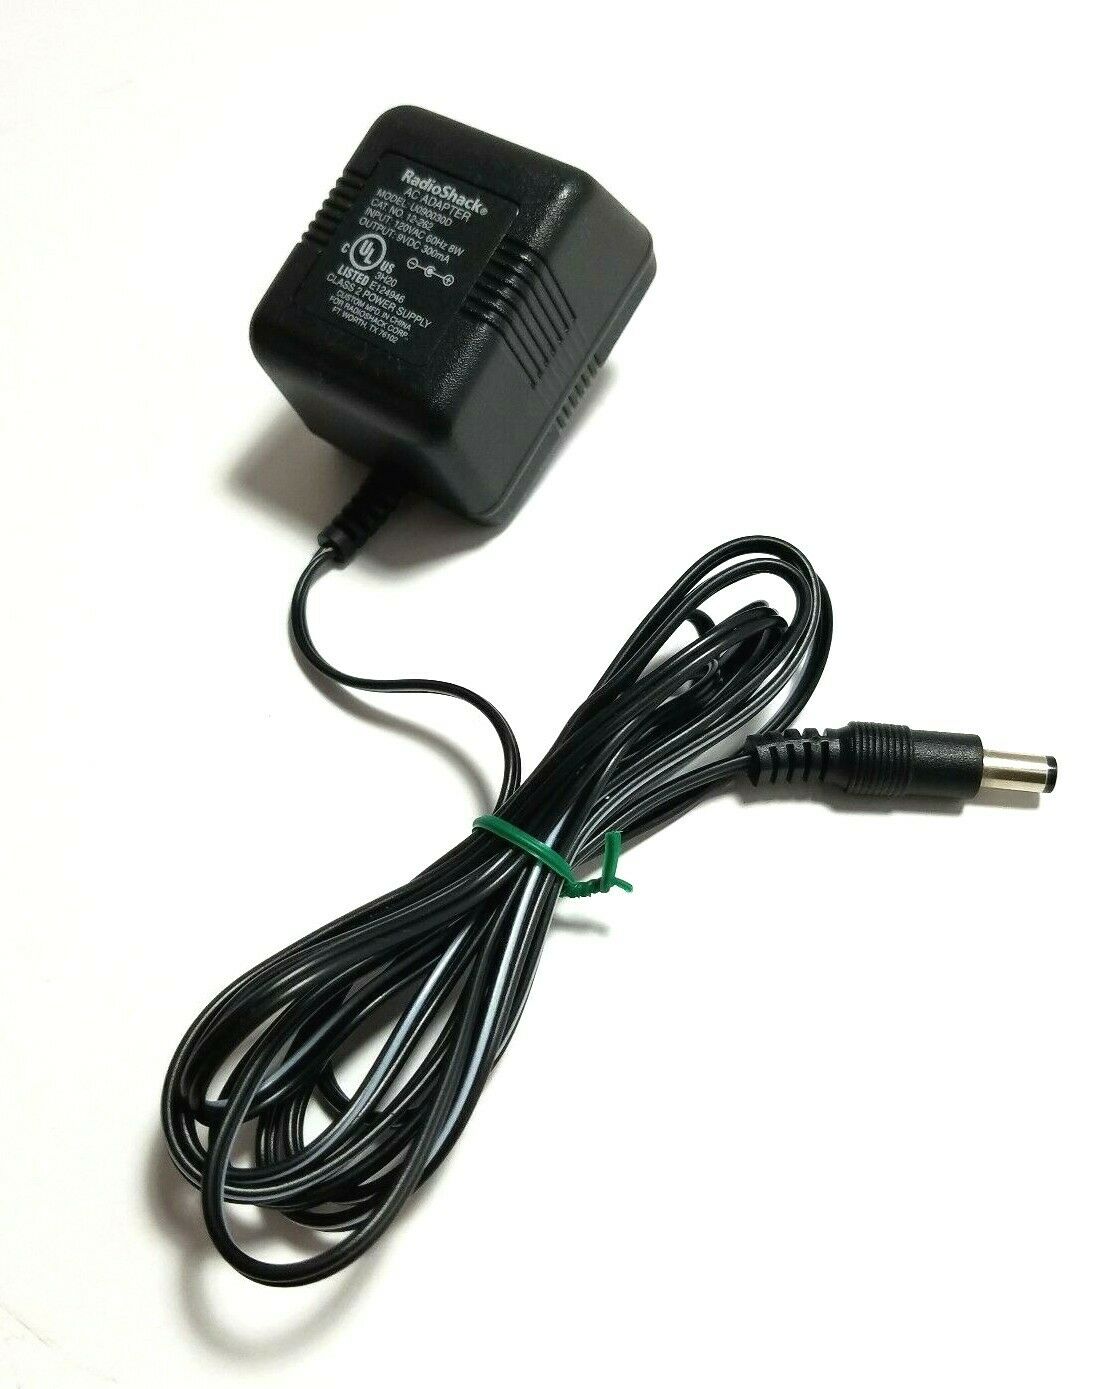 NEW RadioShack U090030D Power Supply AC Adapter 9V 300mA Cat. No. 12-262